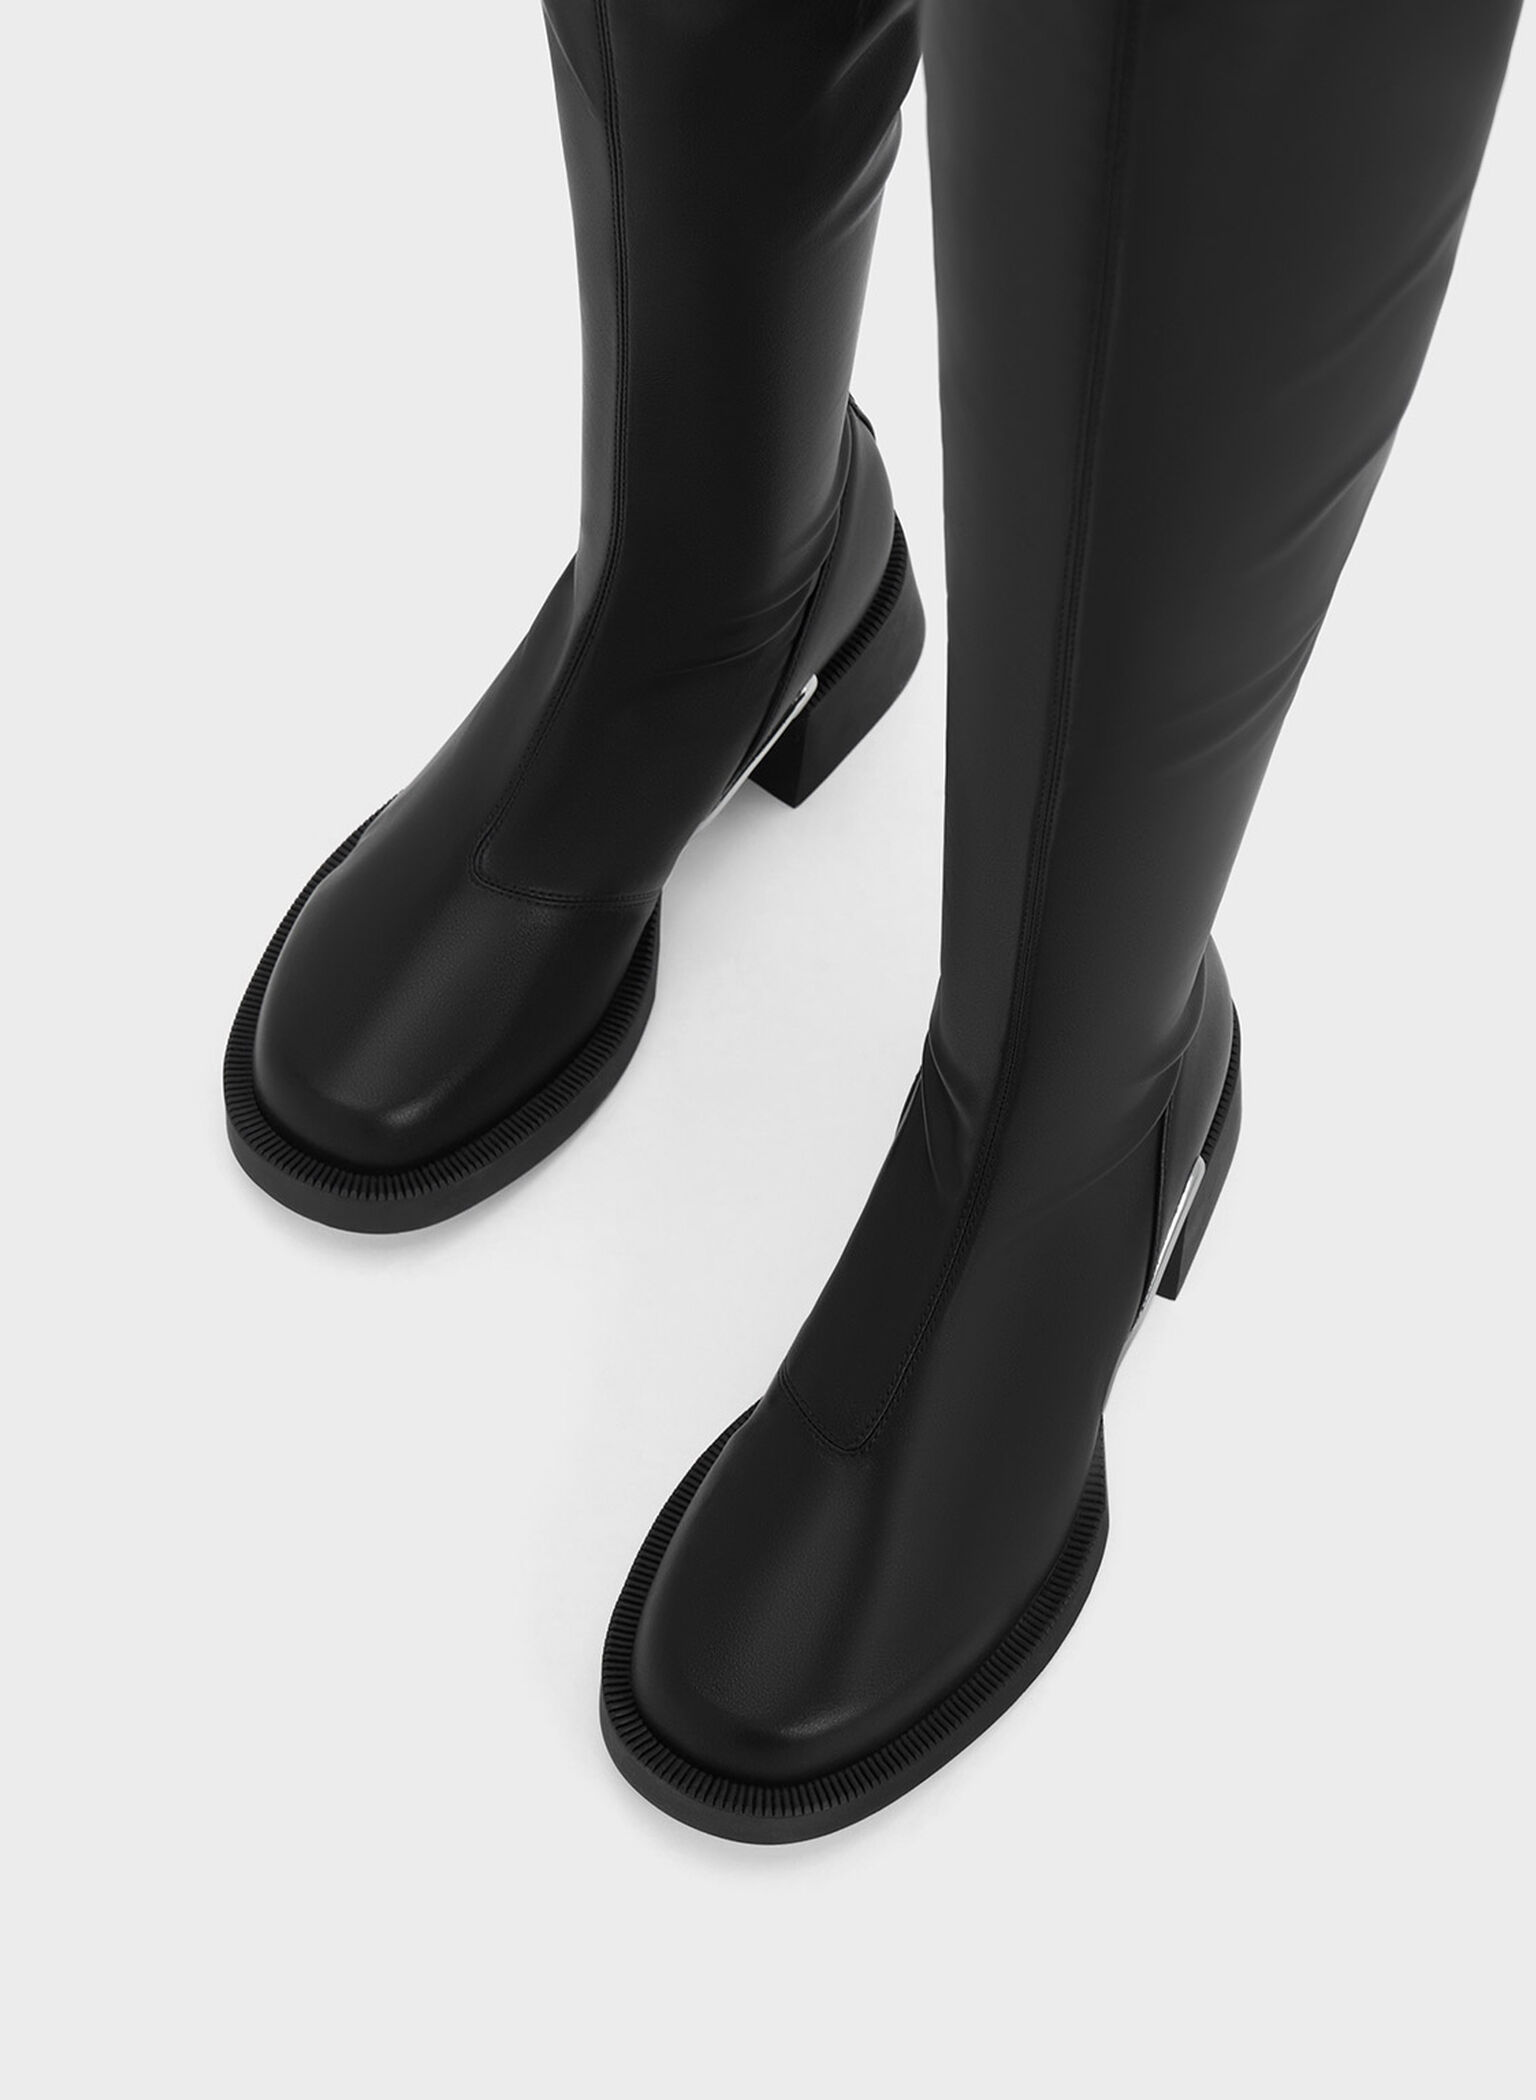 Devon Metallic-Accent Thigh-High Boots, Black, hi-res